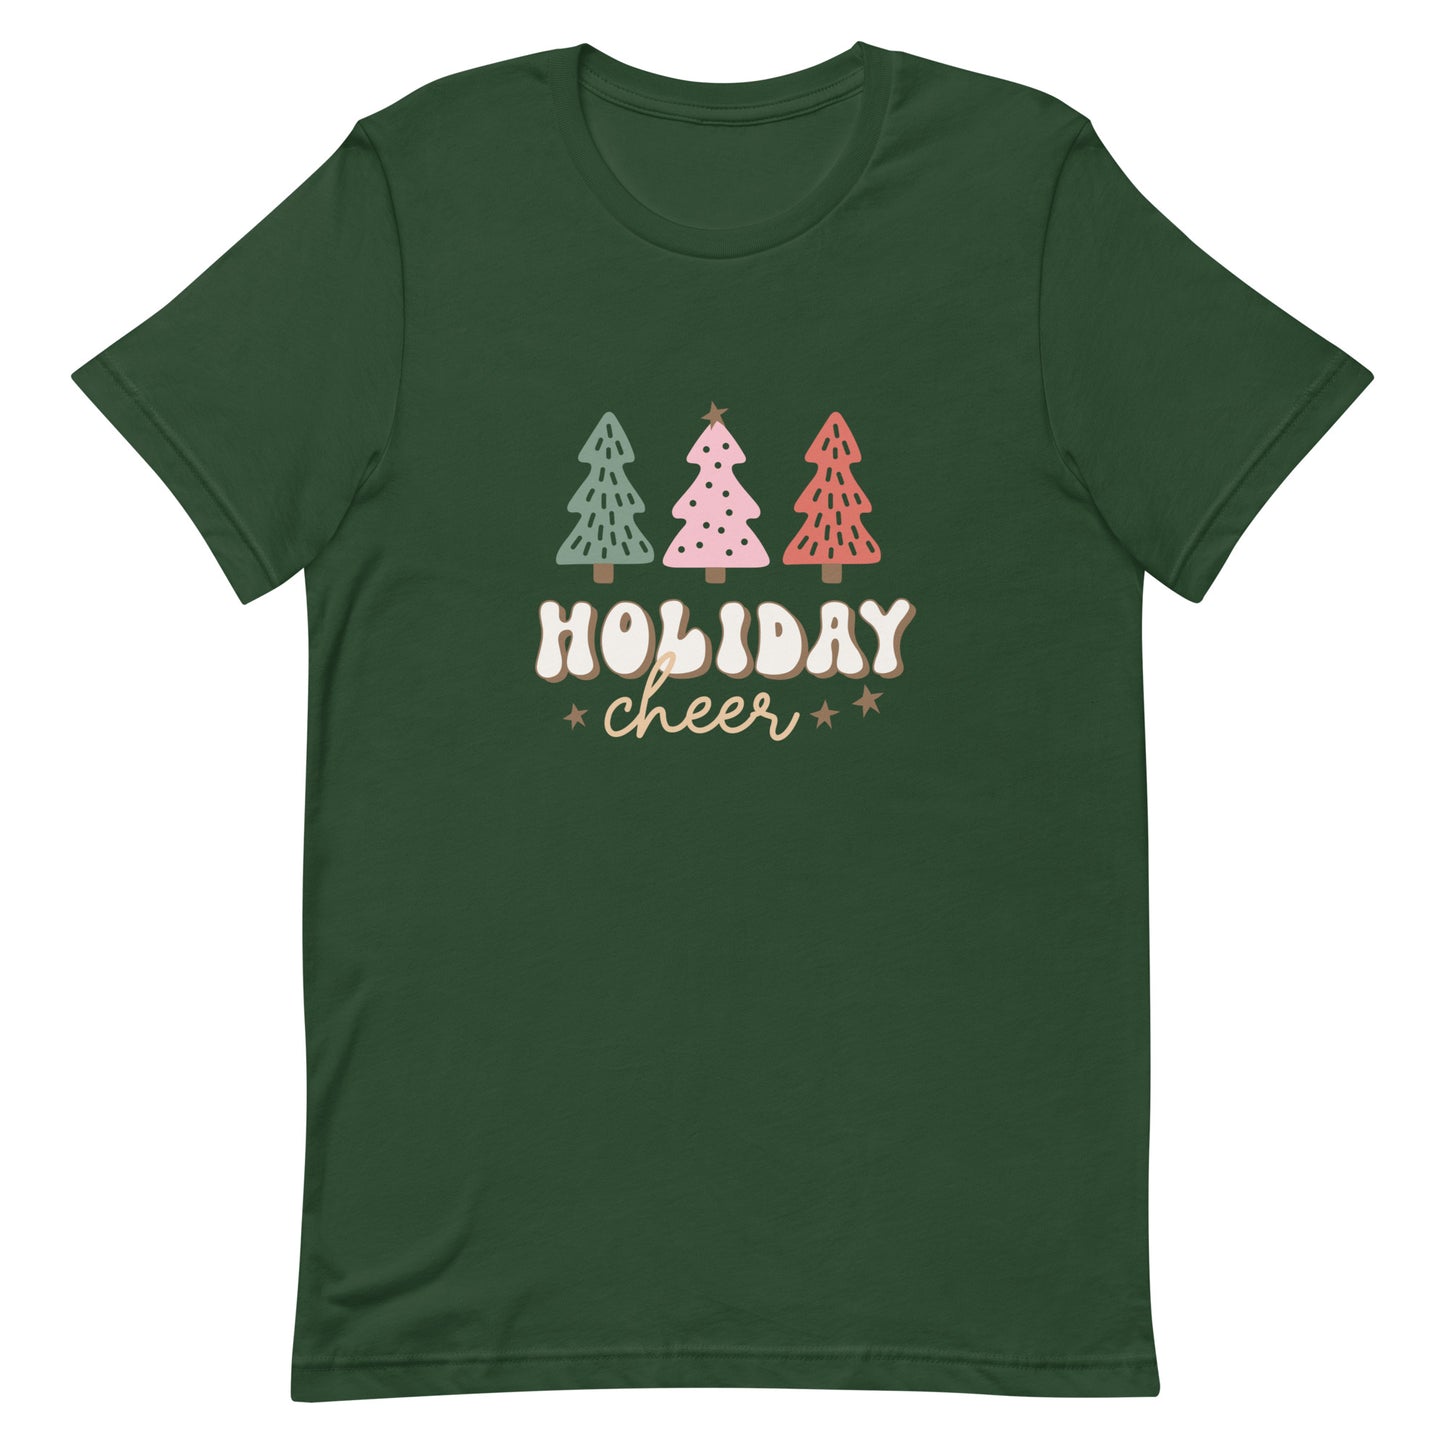 Holiday Cheer Unisex T-shirt - Christmas